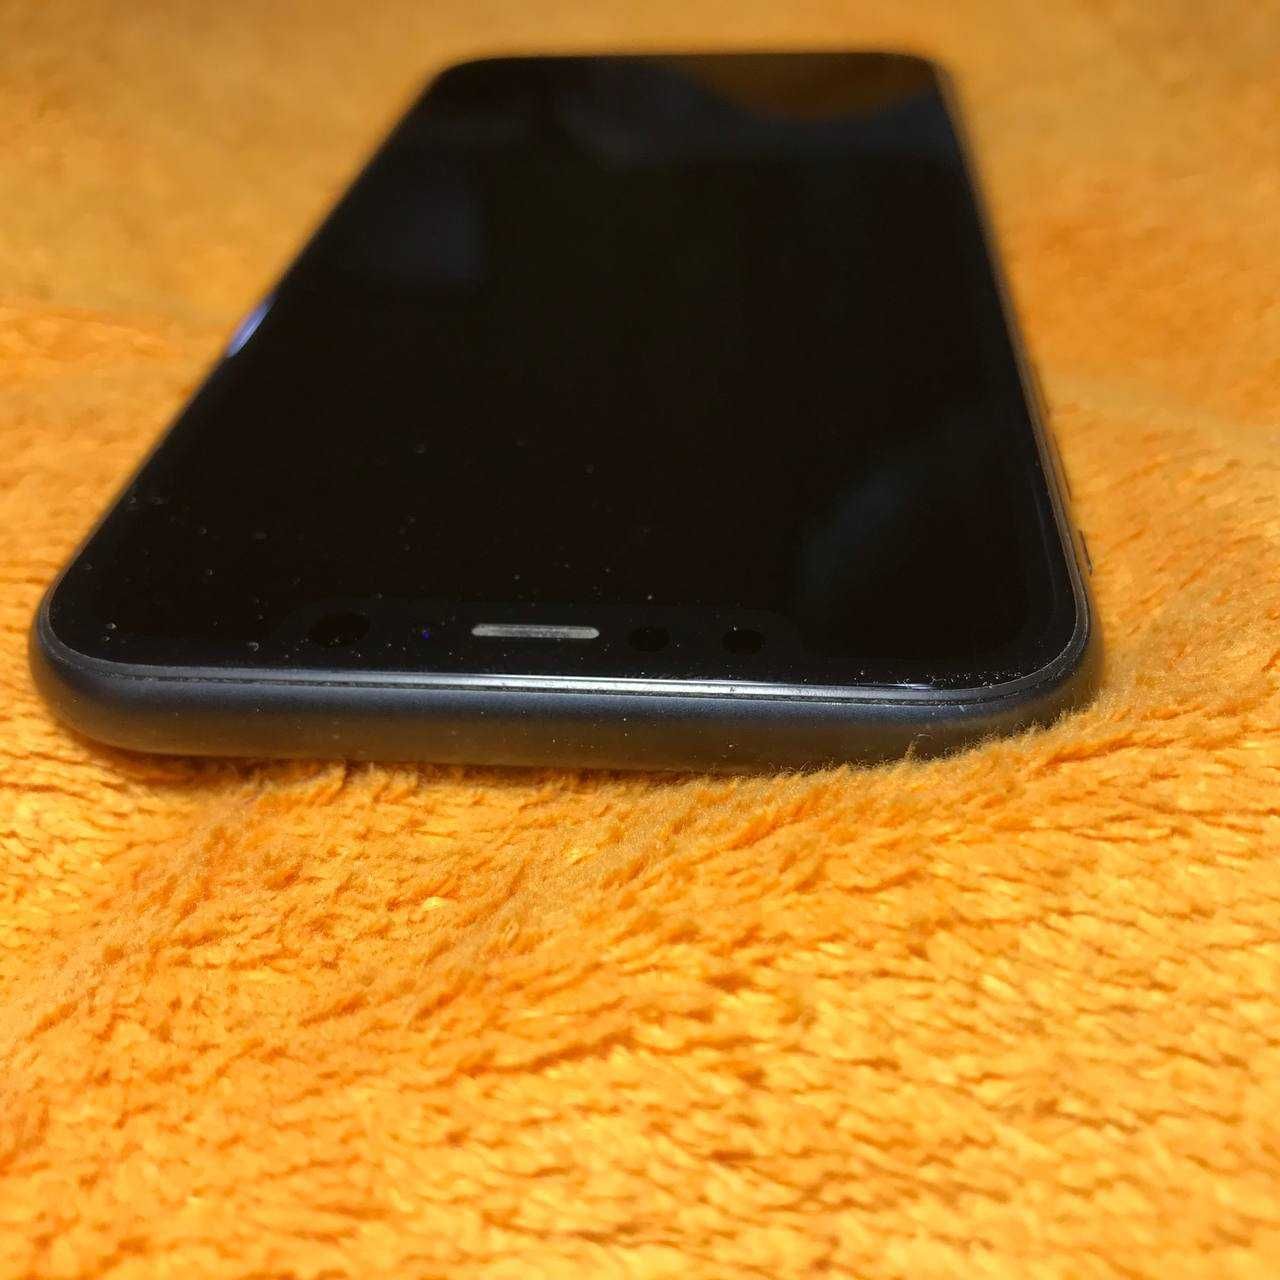 Apple iPhone XR 128GB Black